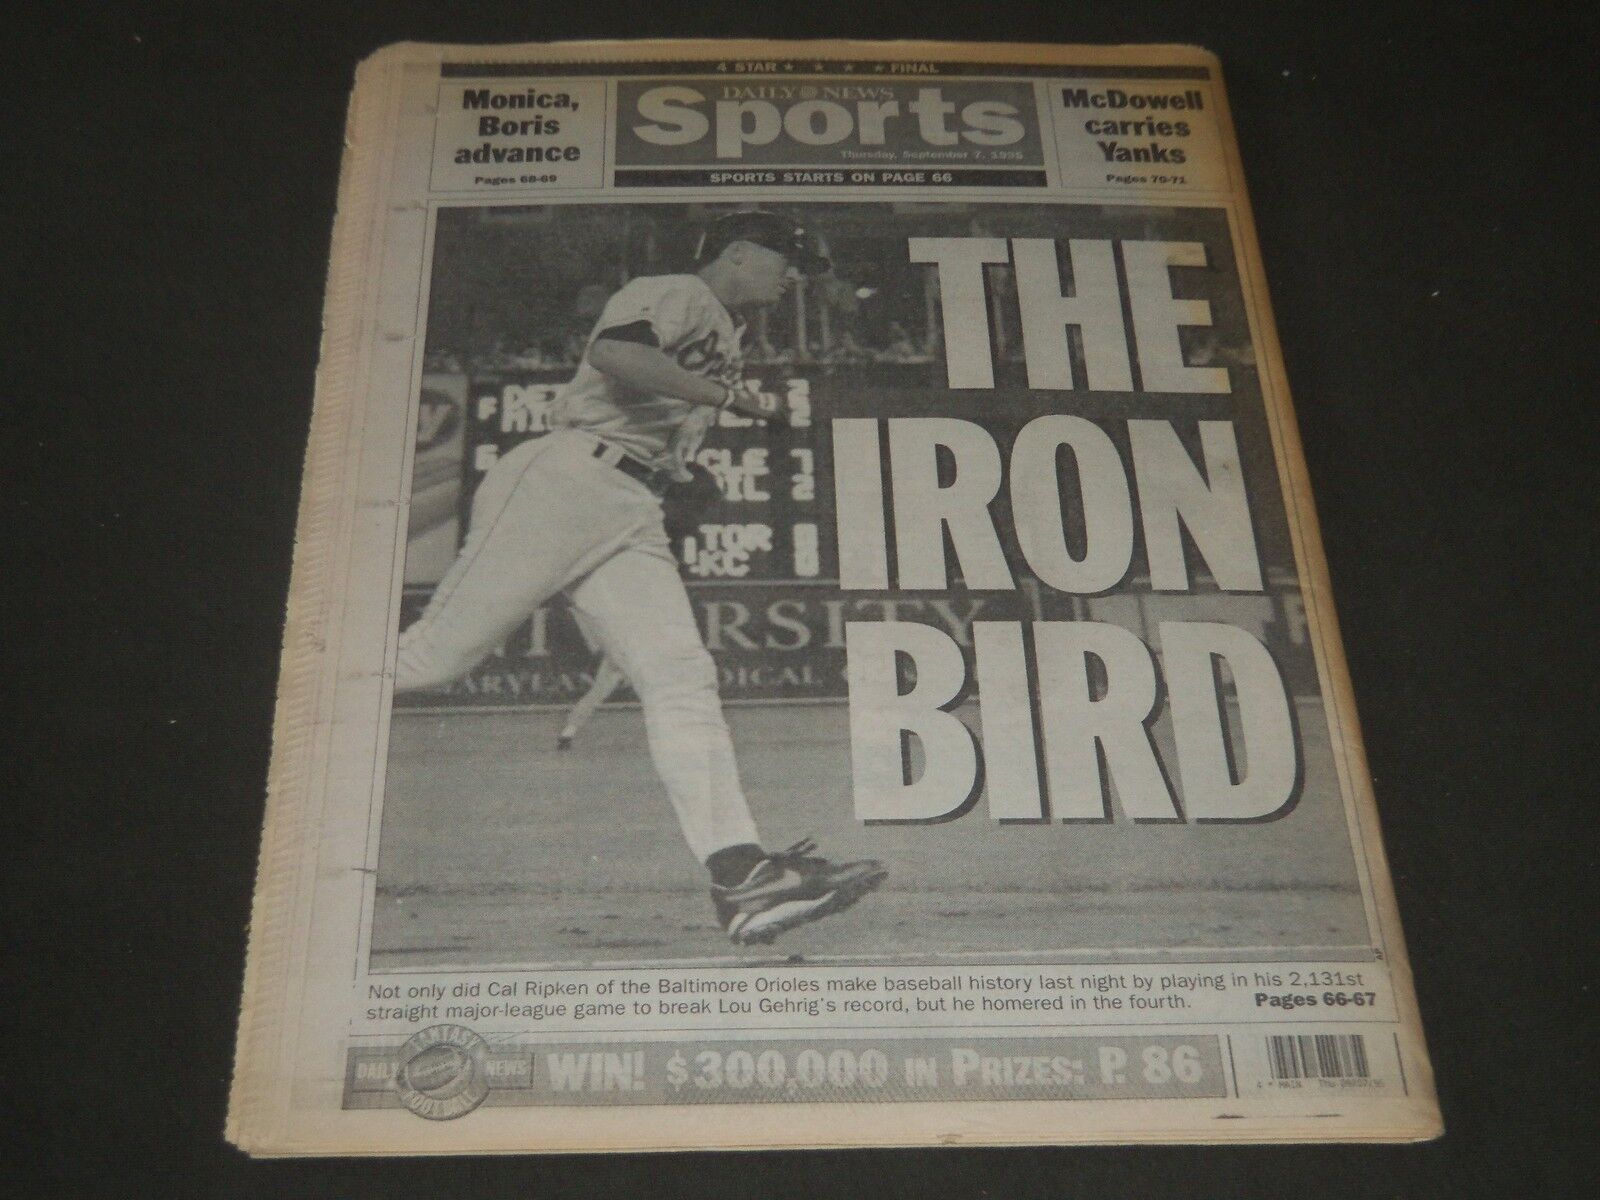 1995 SEPTEMBER 7 NY DAILY NEWS NEWSPAPER - IRON BIRD HOLY CAL - NP 2542